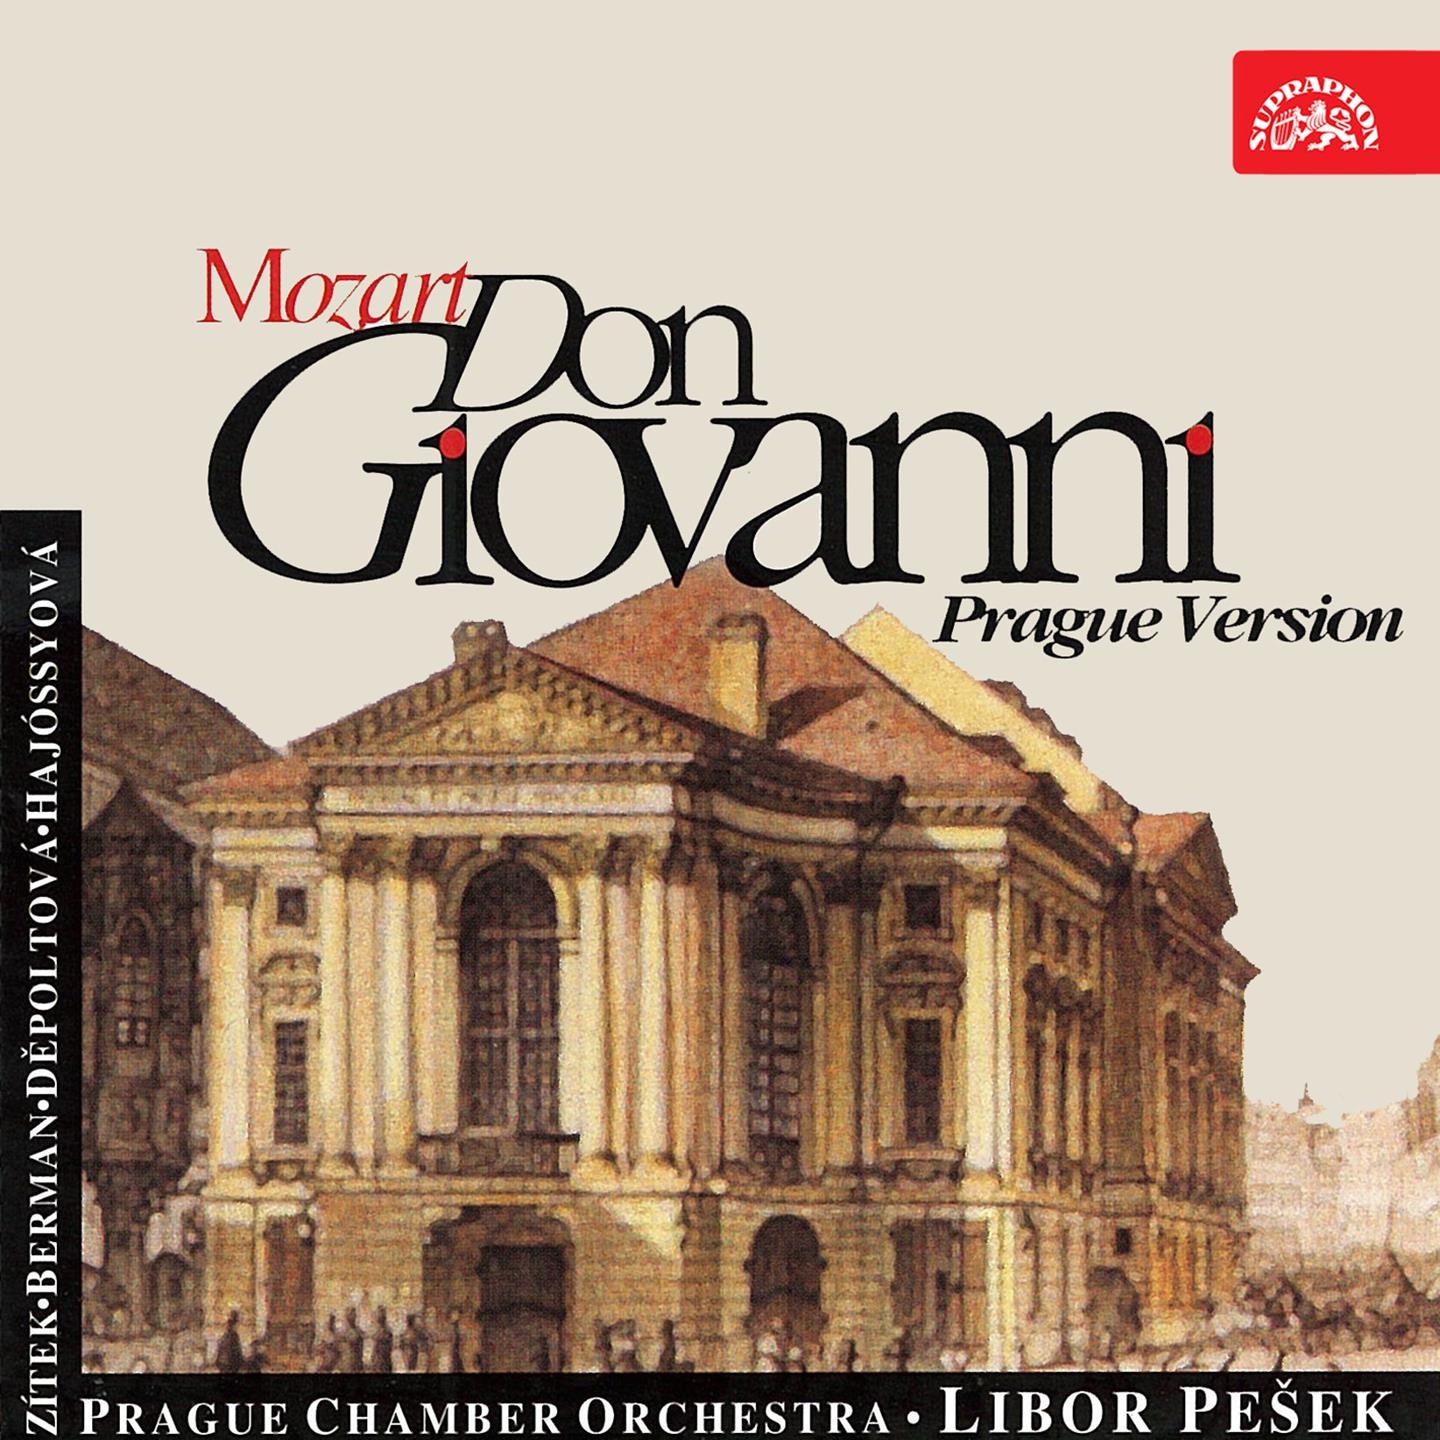 Don Giovanni, .: "Overture"